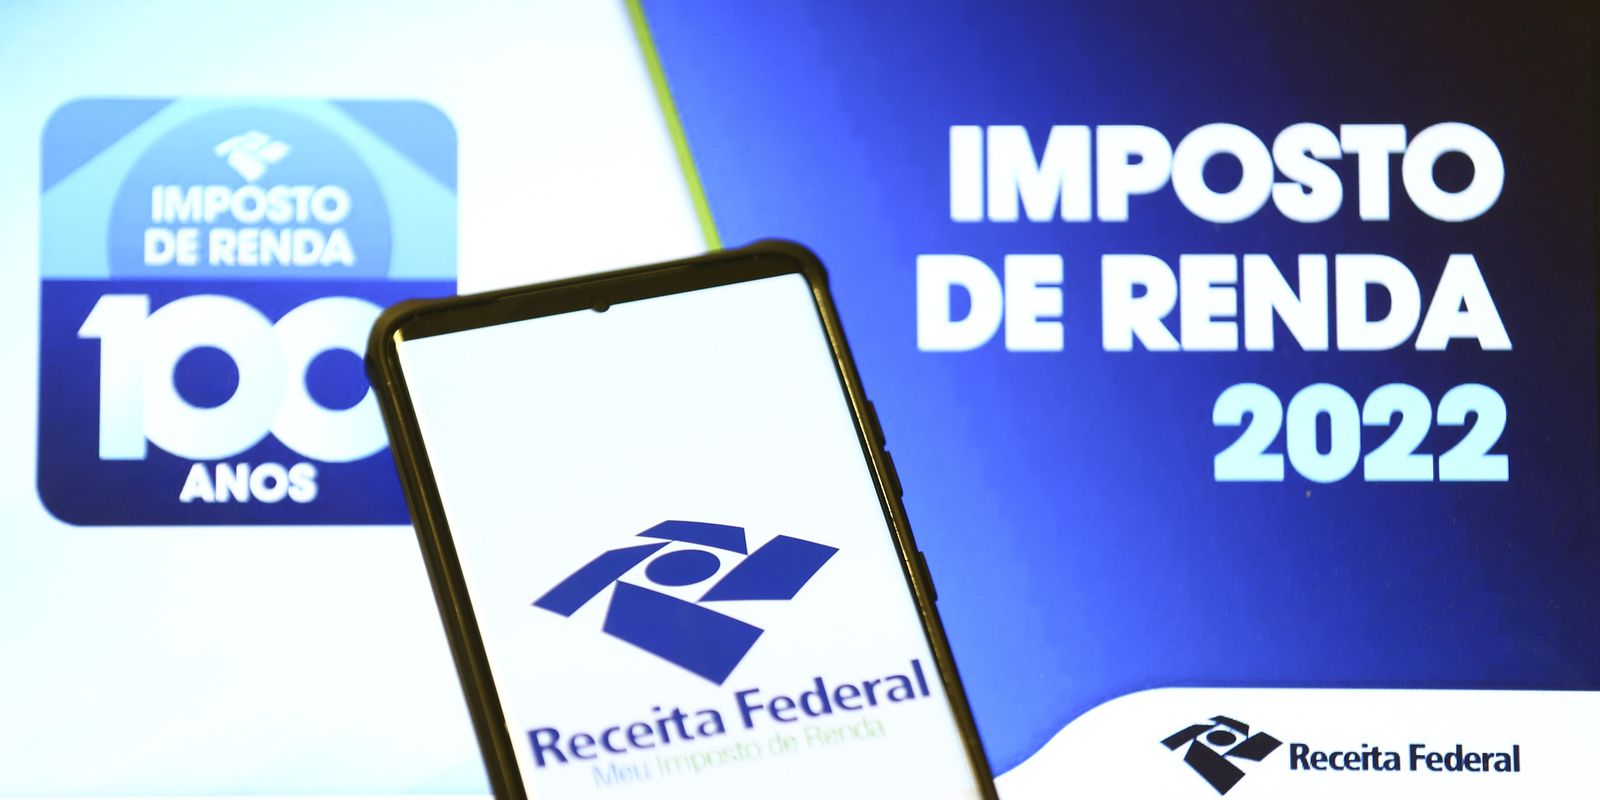 Agência Brasil explains news in the income tax declaration